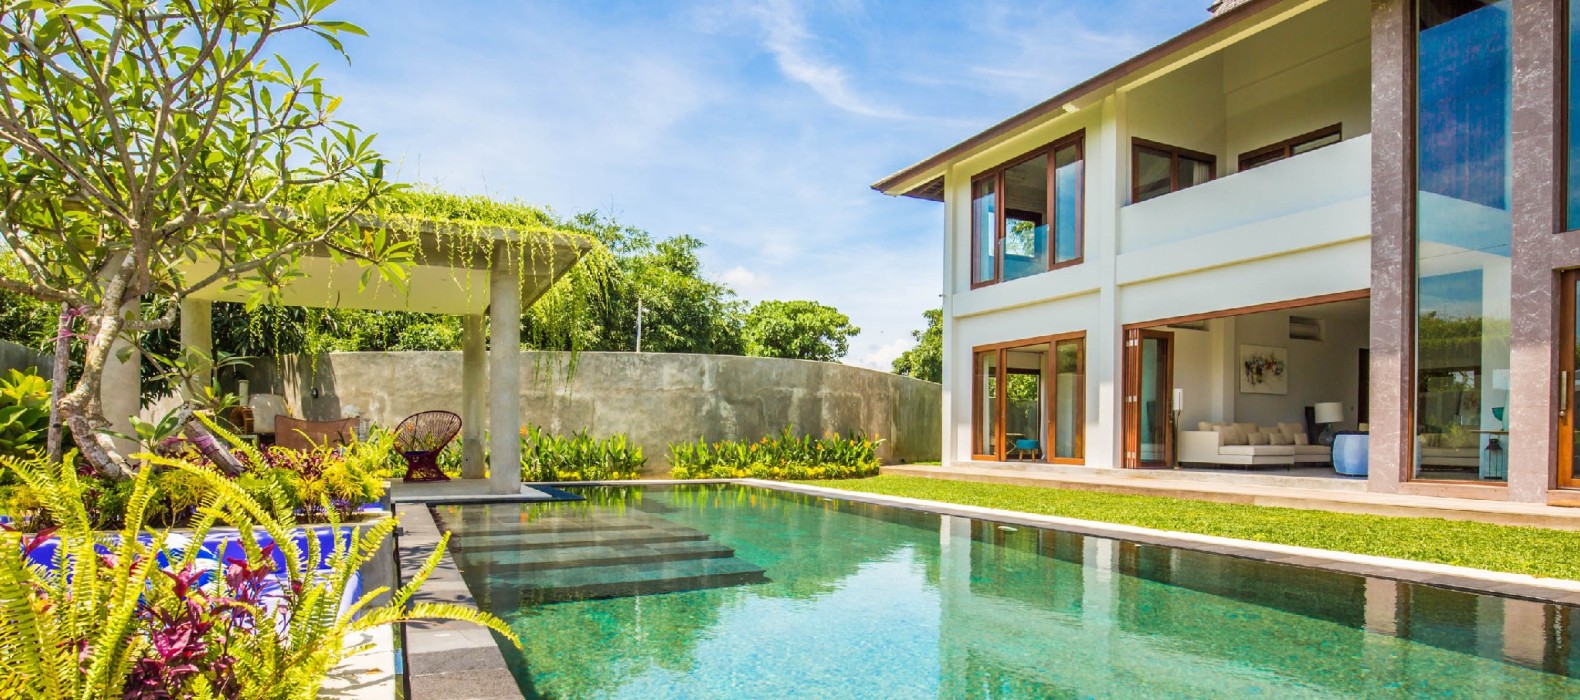 Exterior pool view of Villa Delfino in Bali